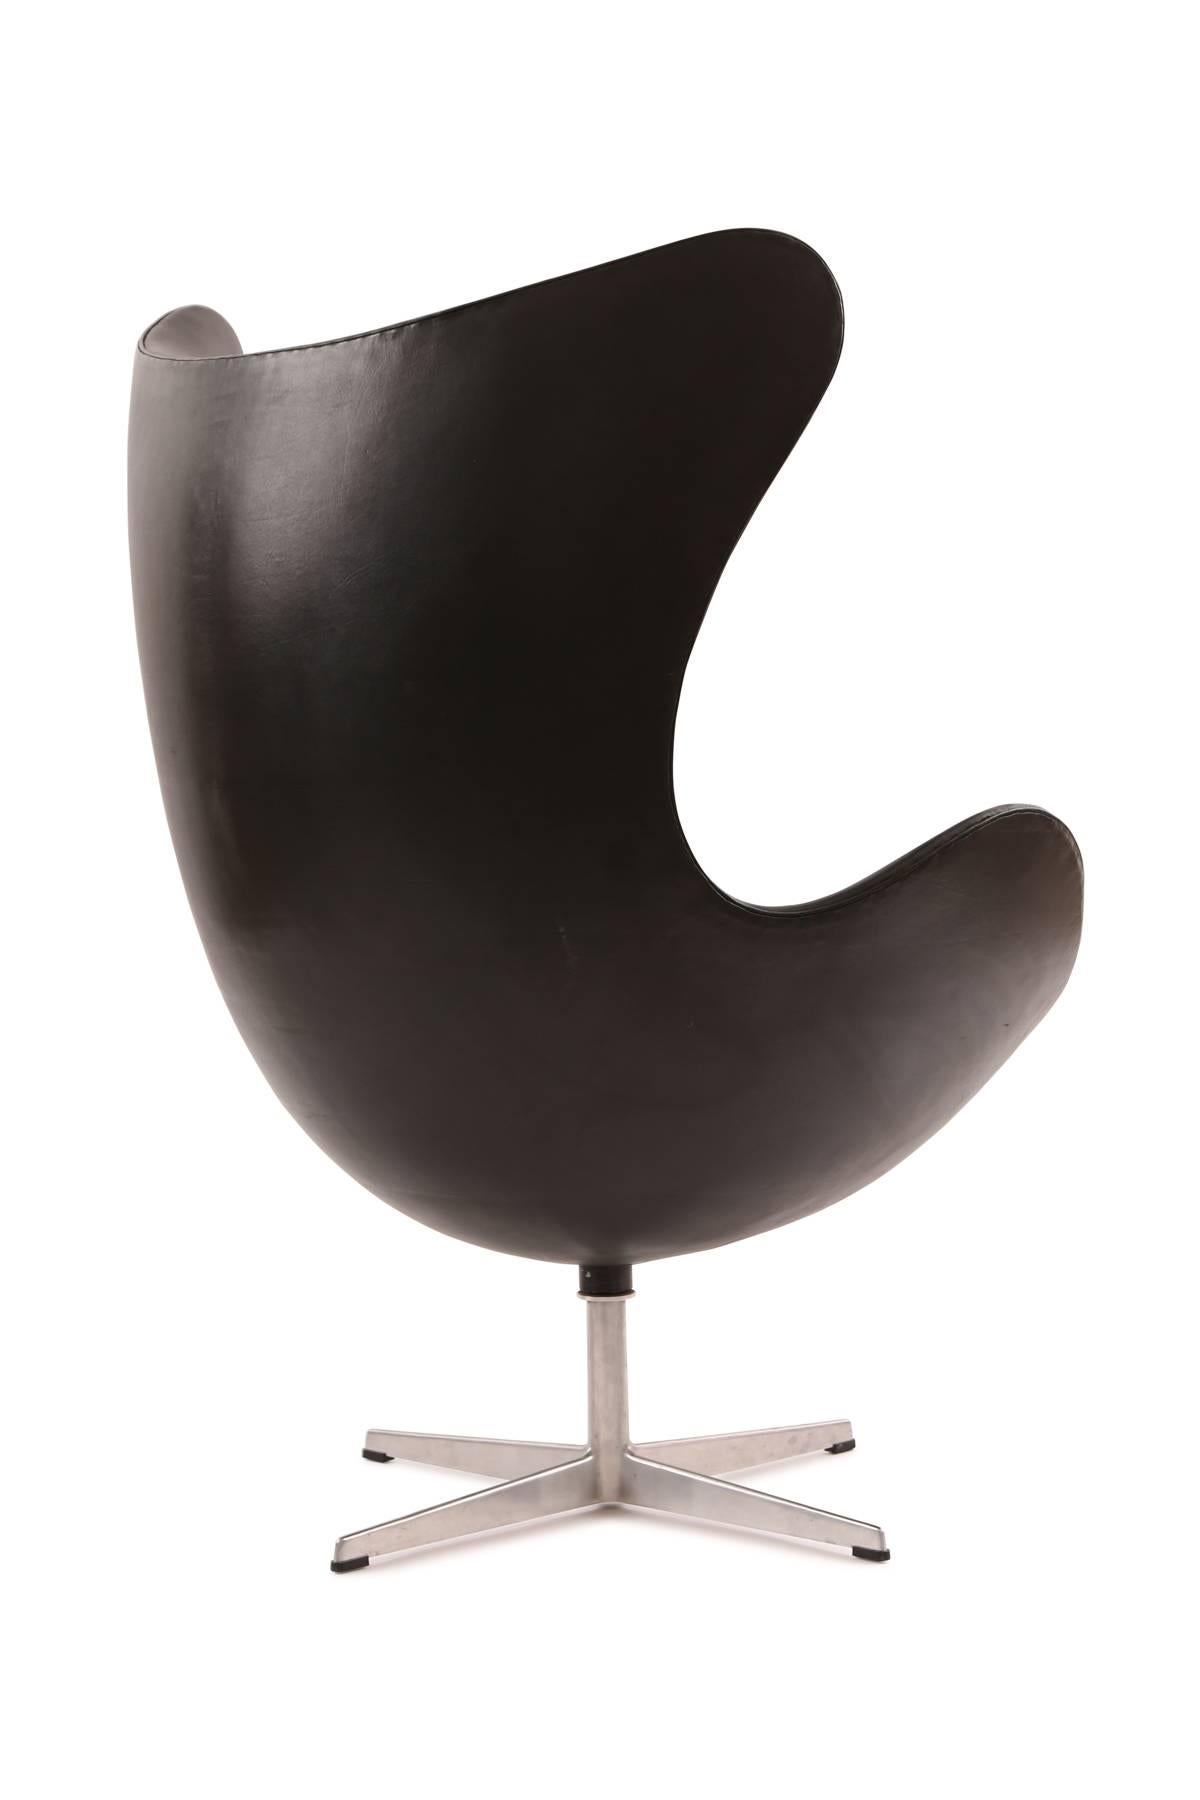 Mid-Century Modern Arne Jacobsen for Fritz Hansen First Generation Leather Egg Chair